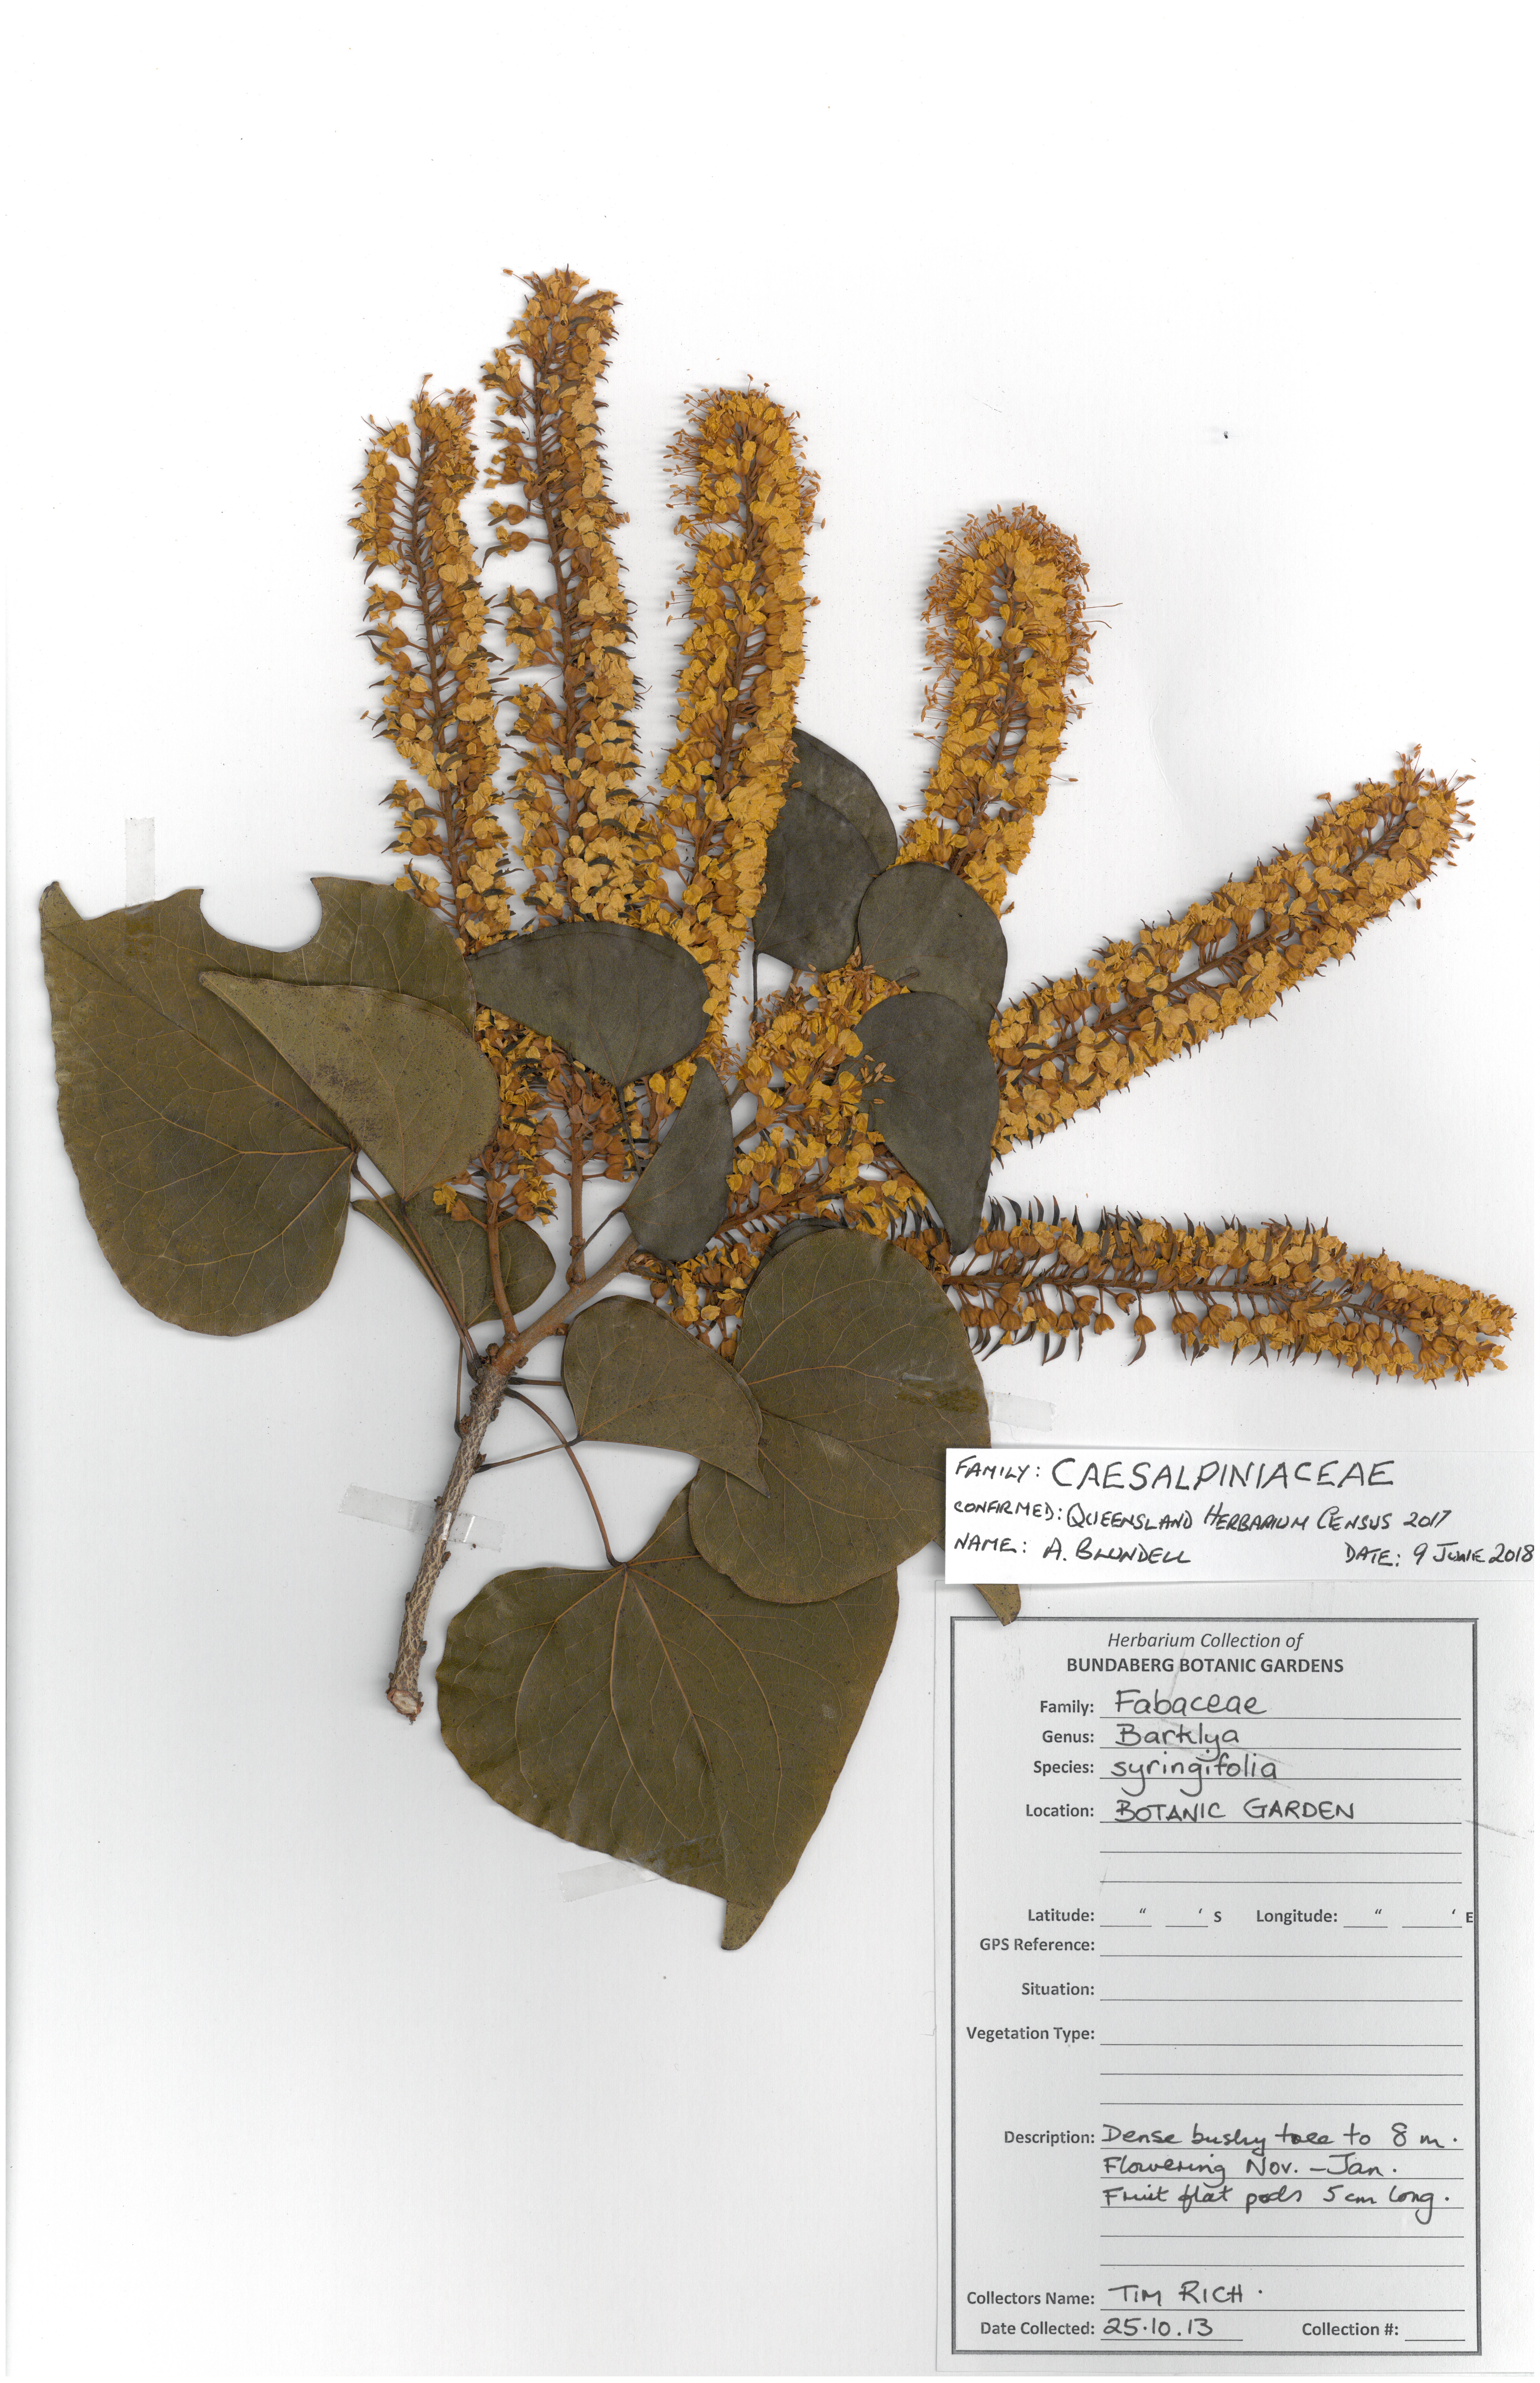 Caesalpiniaceae barklya syringifolia